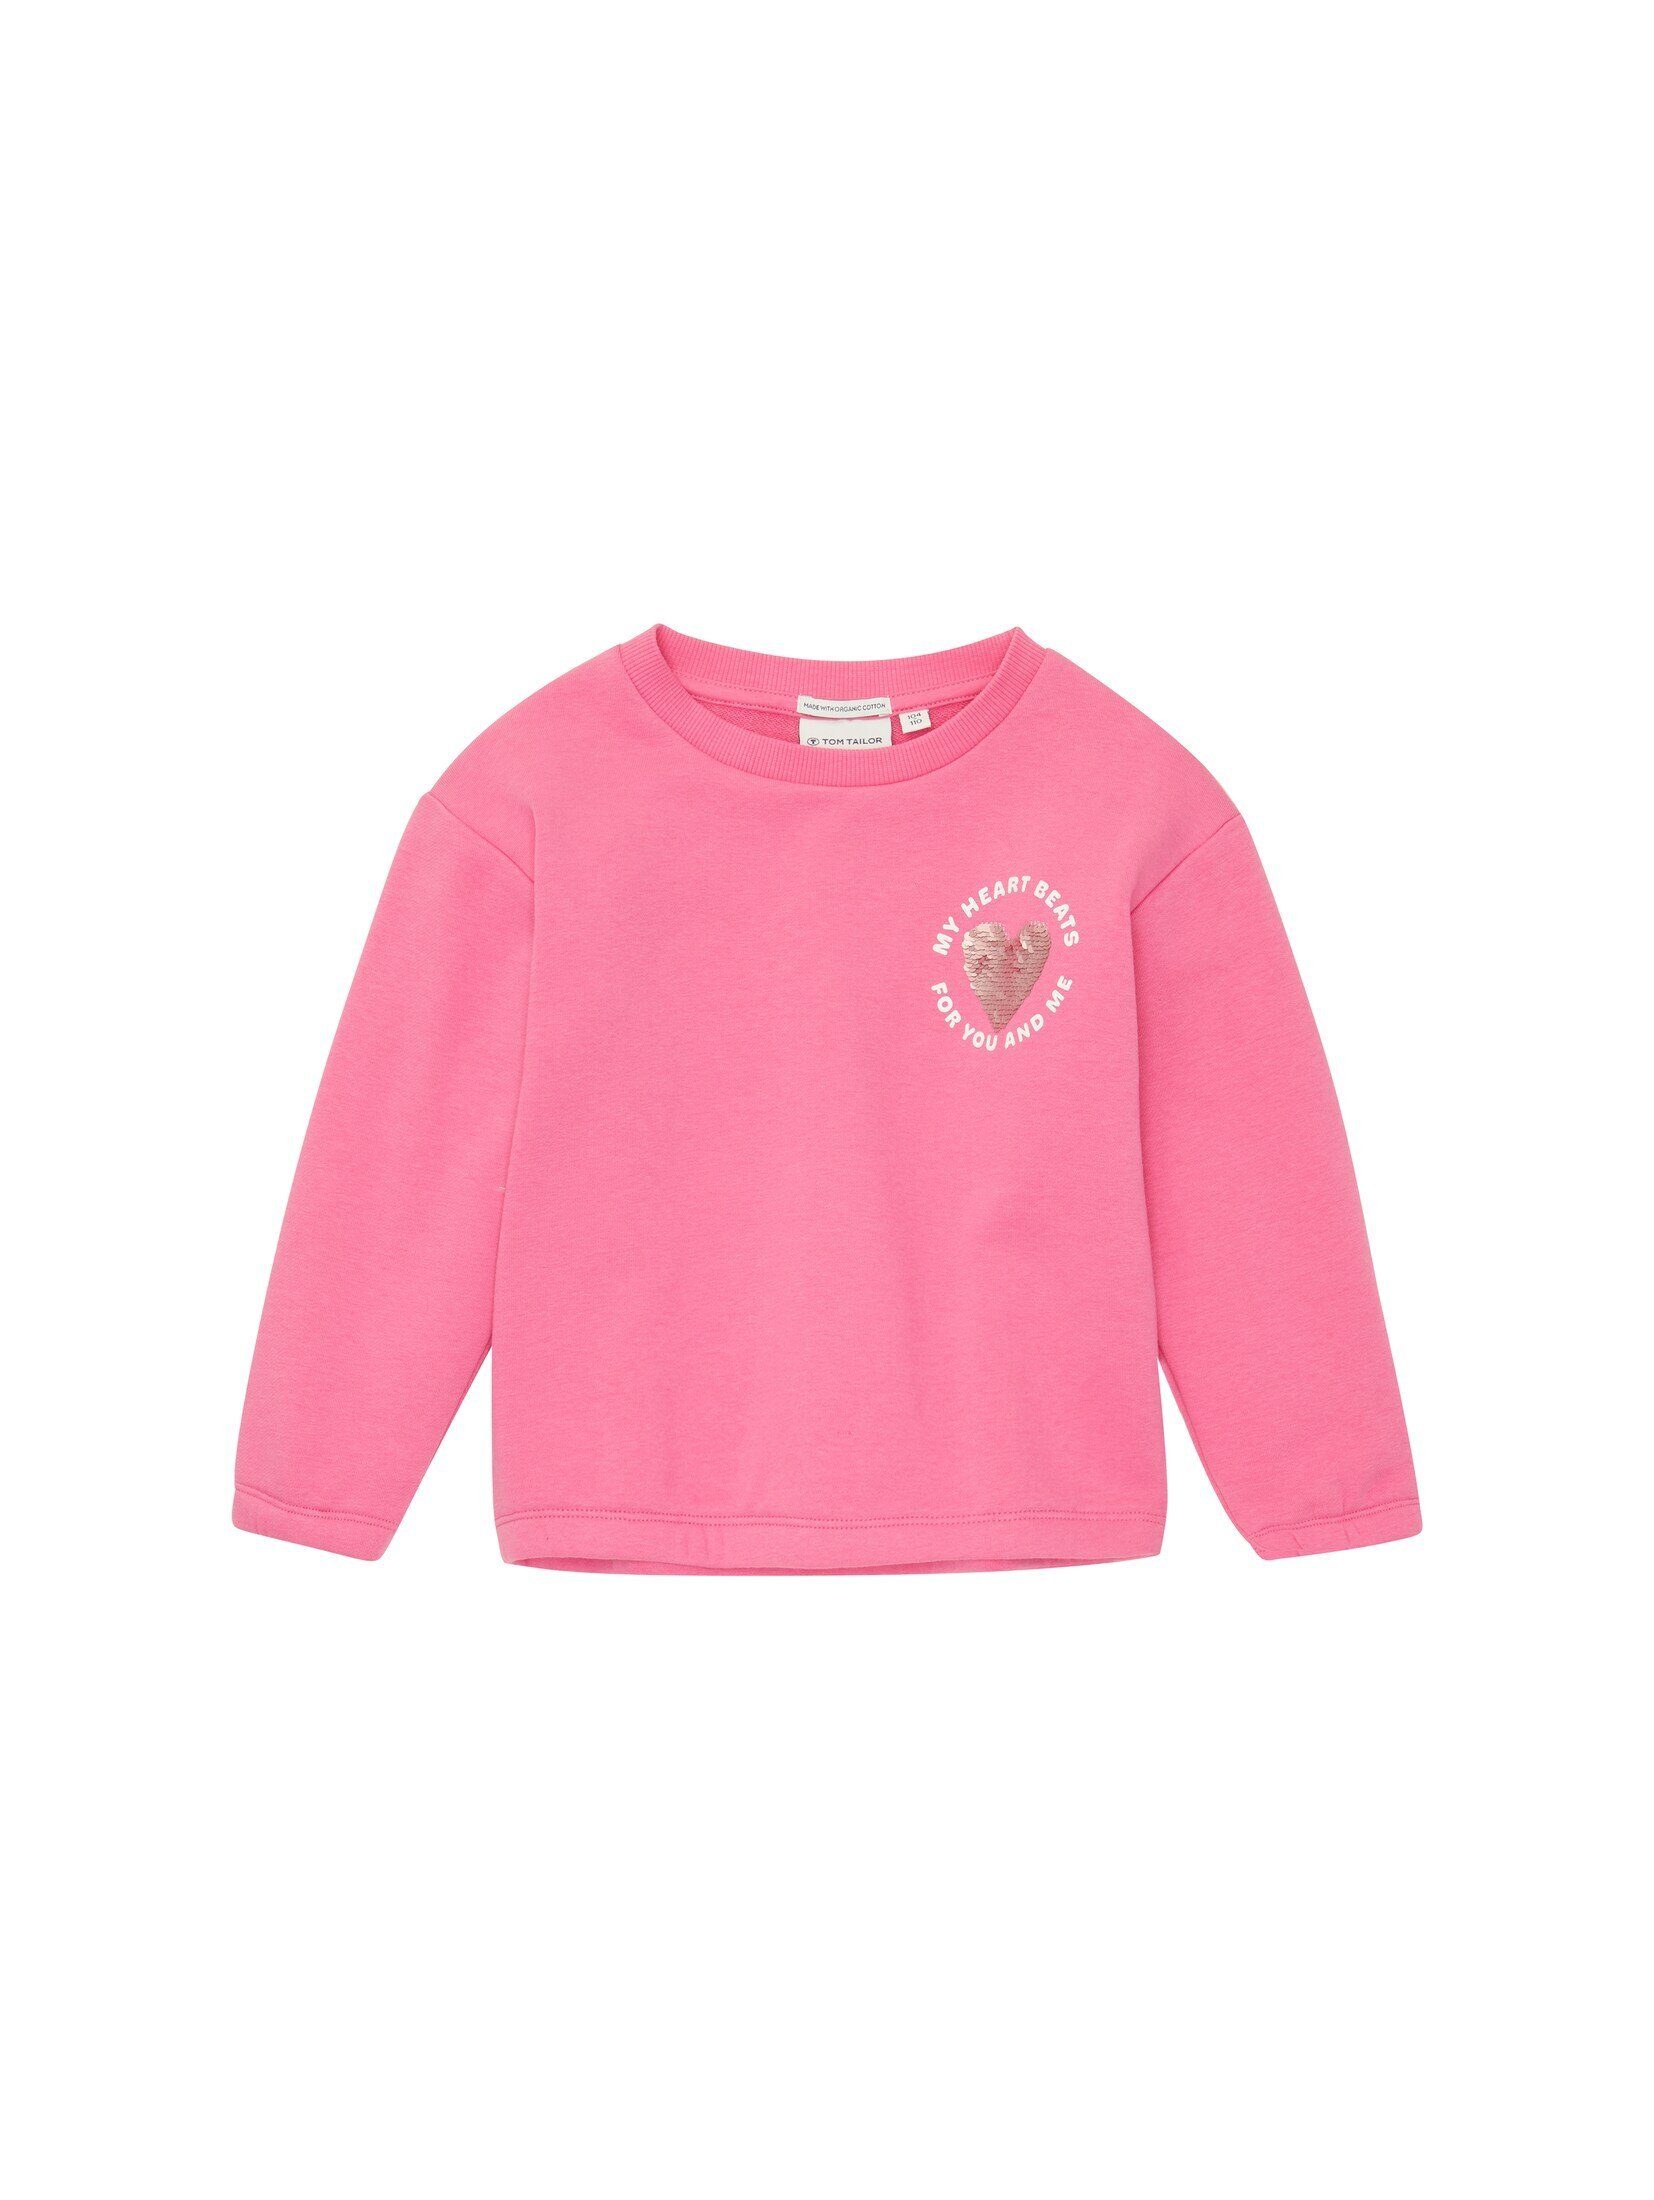 TOM TAILOR Sweatjacke Sweatshirt mit Artwork carmine pink